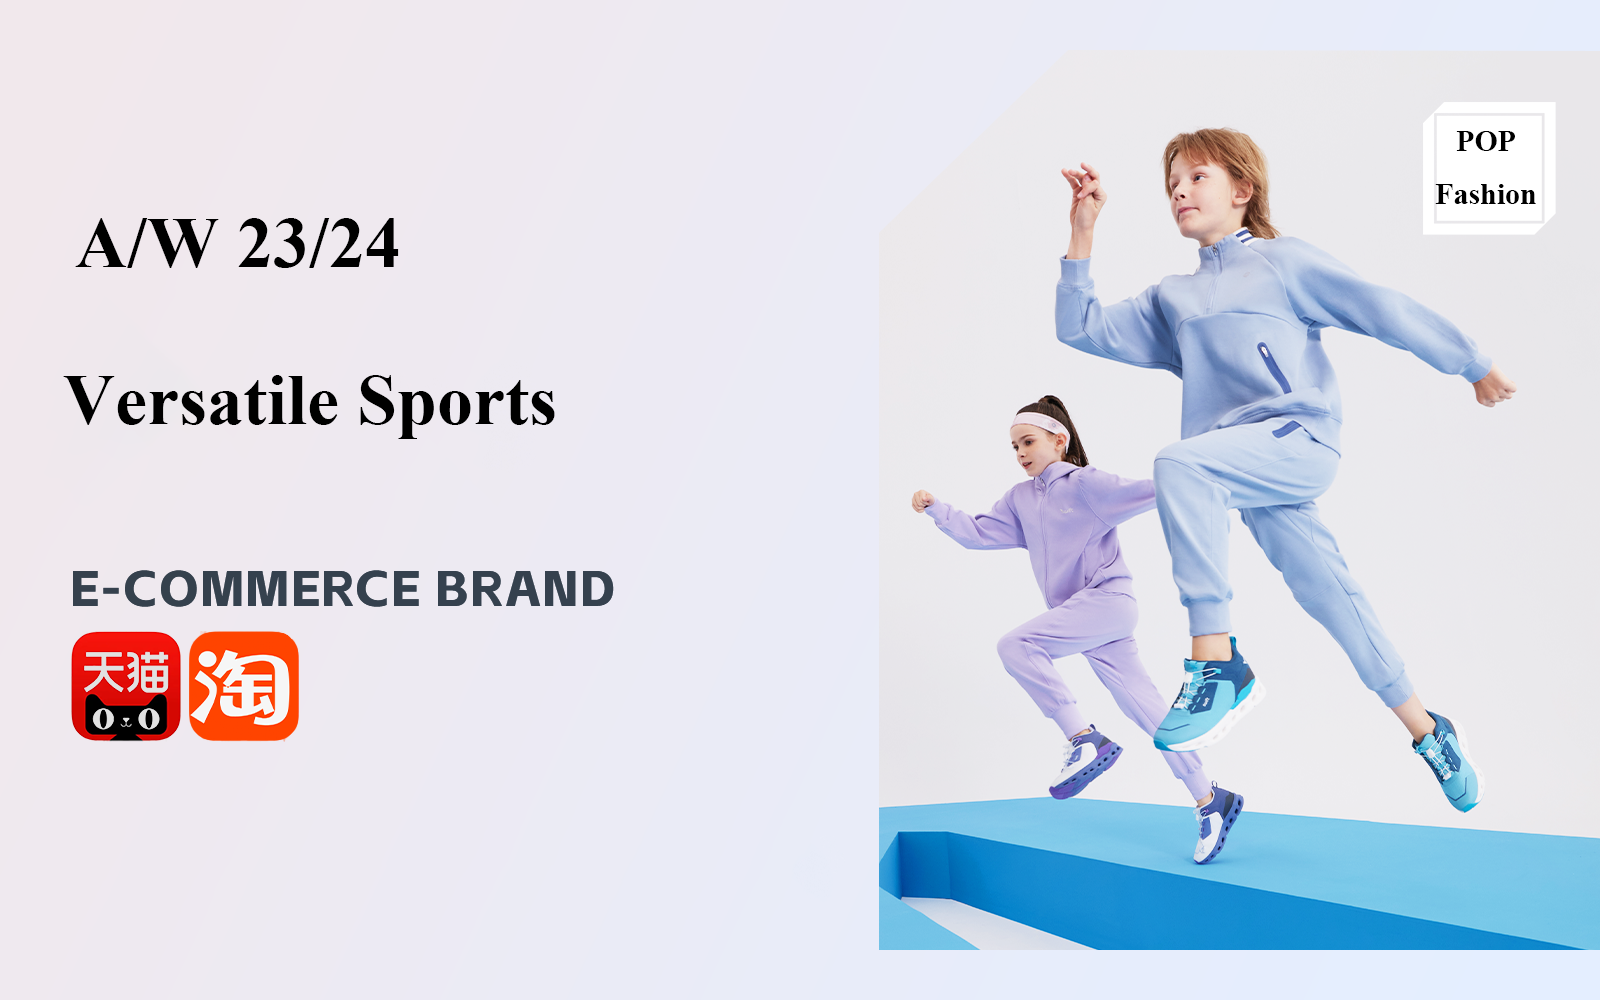 Versatile Sports -- The Comprehensive Analysis of E-commerce Kidswear Brand